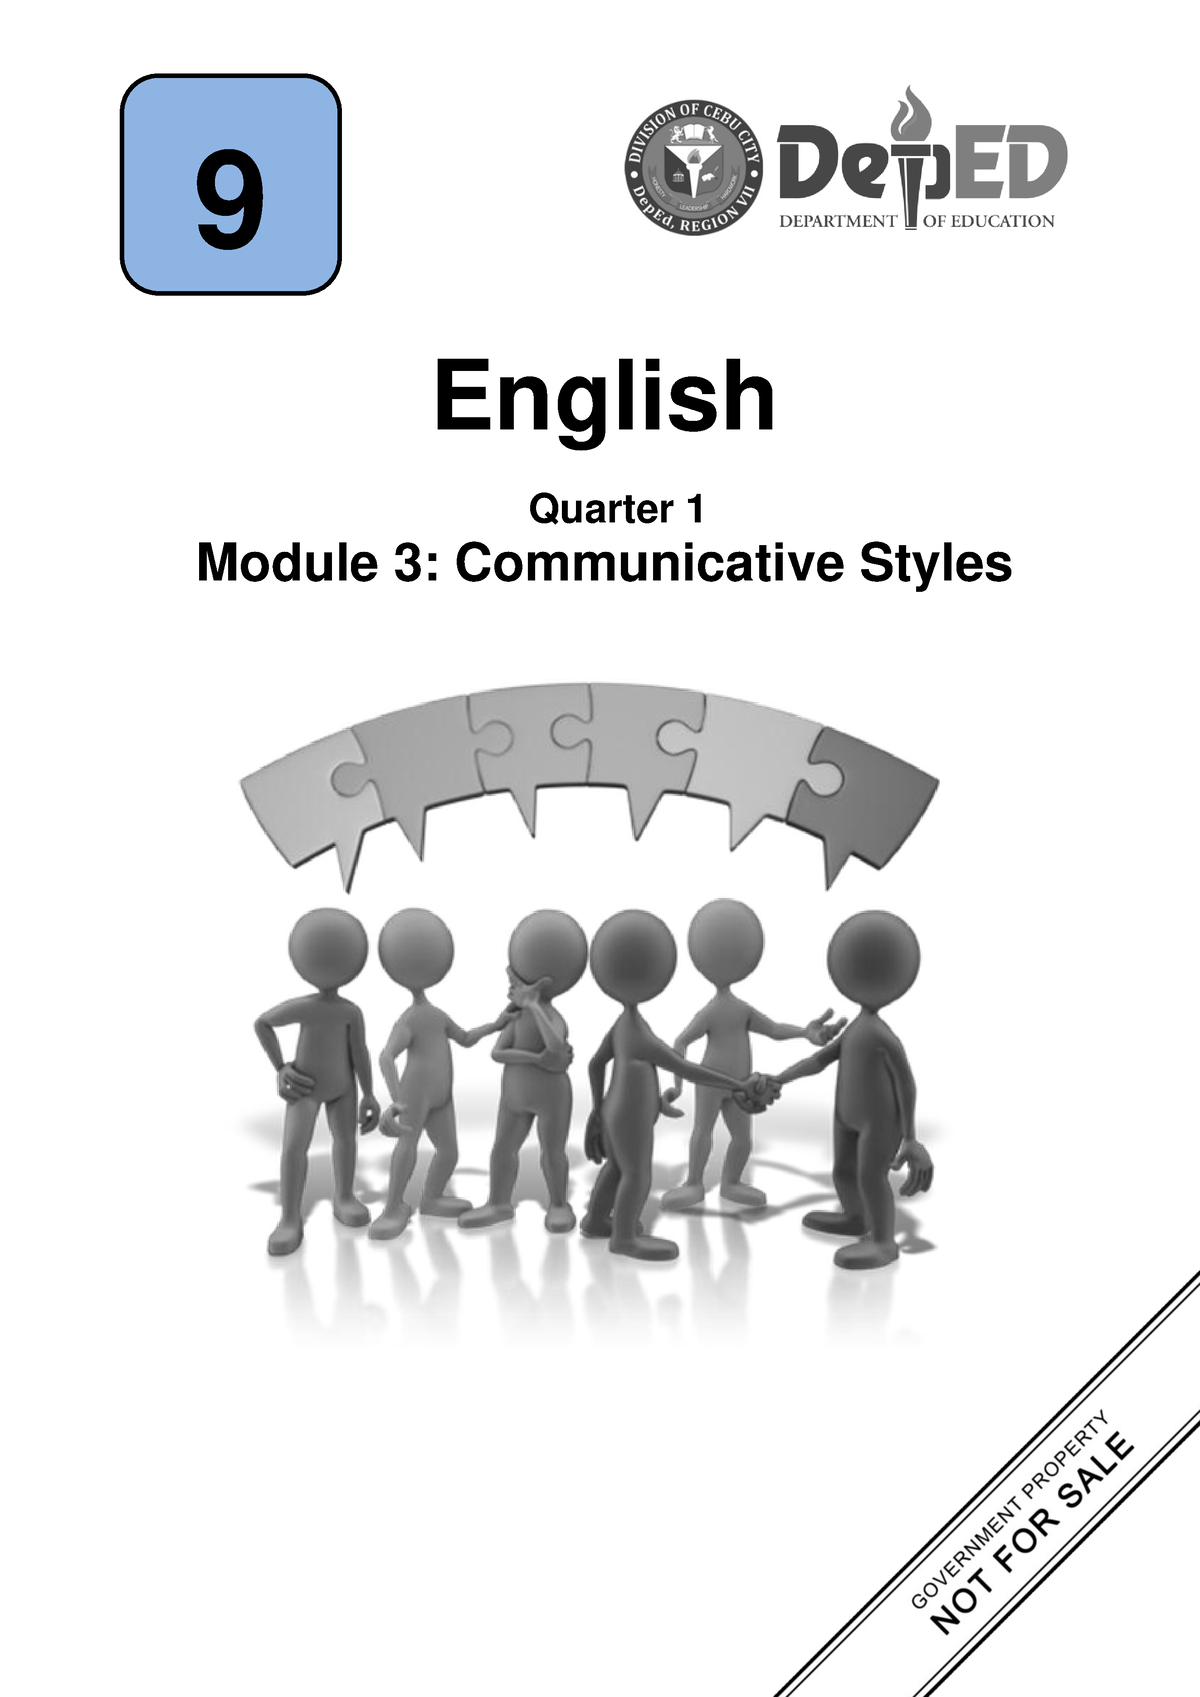 m3-q1-english-9-english-quarter-1-module-3-communicative-styles